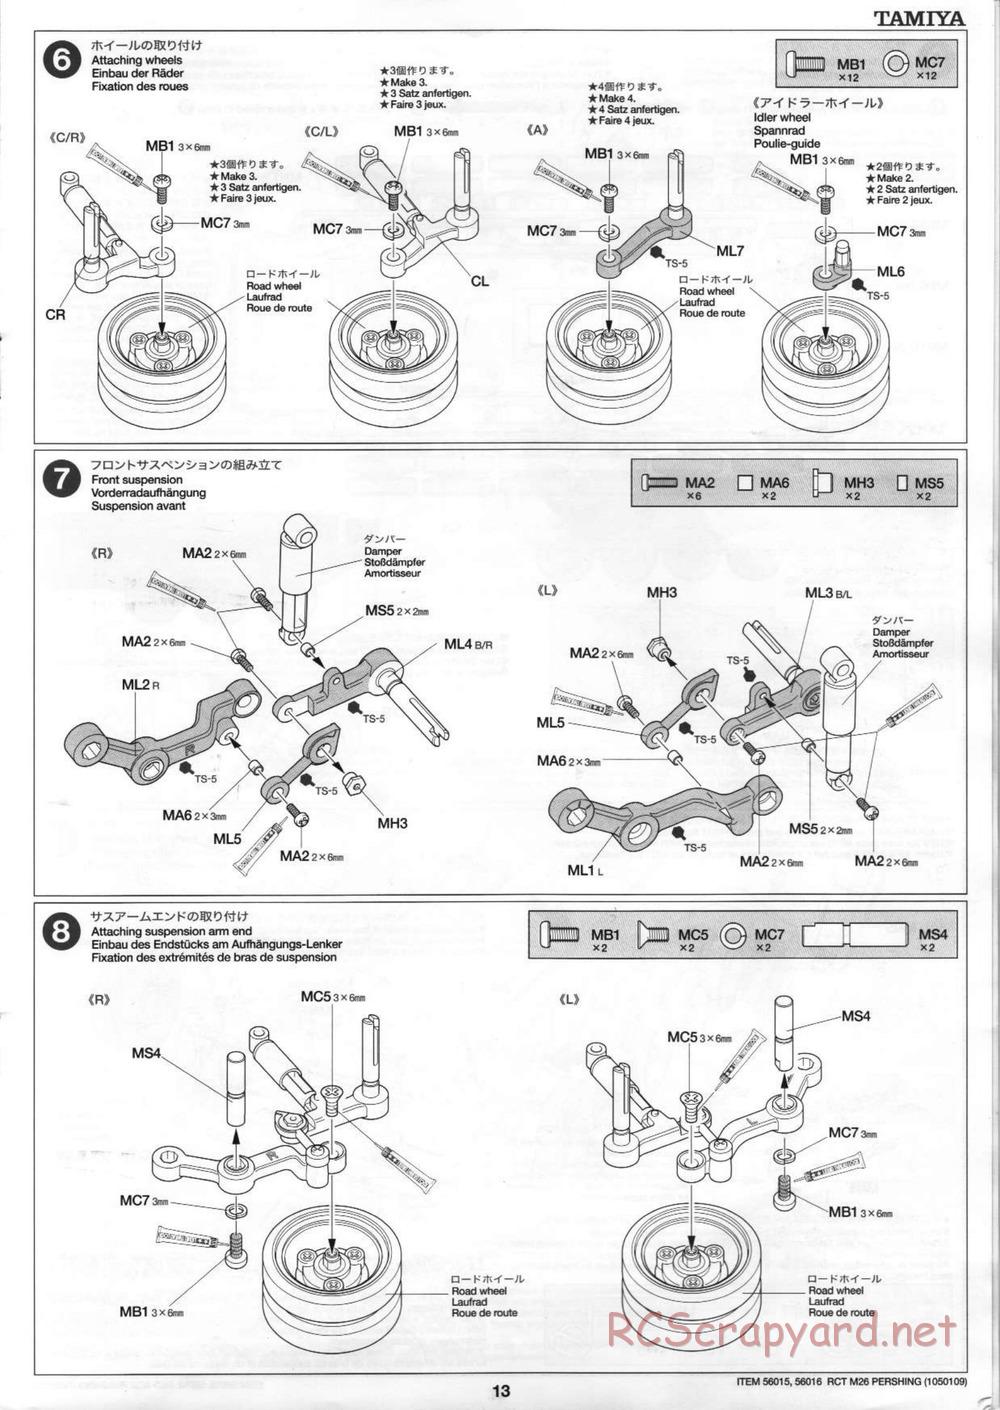 Tamiya - M26 Pershing - 1/16 Scale Chassis - Manual - Page 13